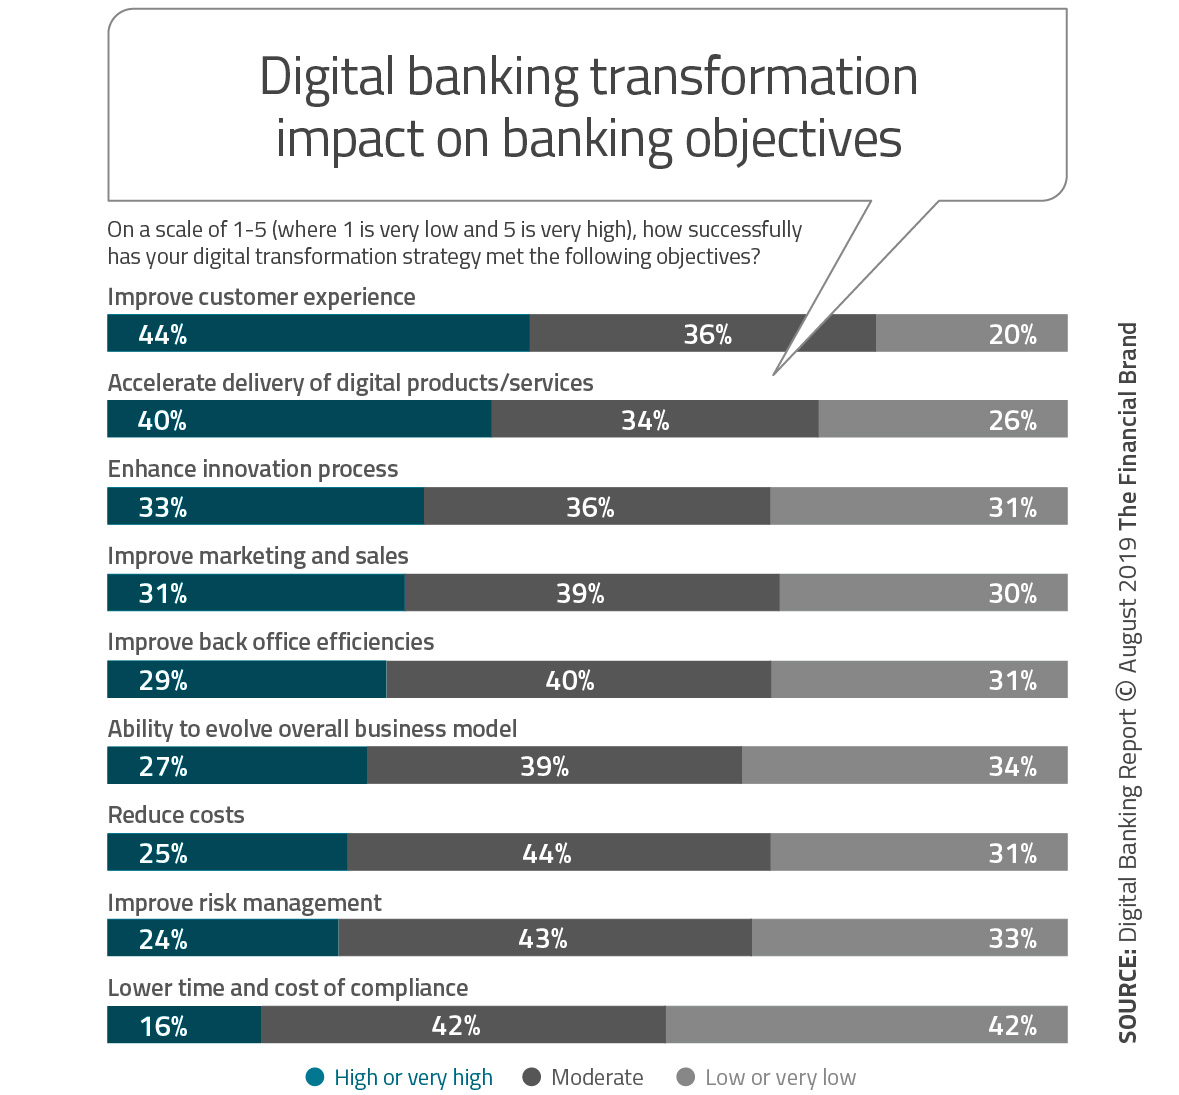 Digital banking transformation impact on banking objectives